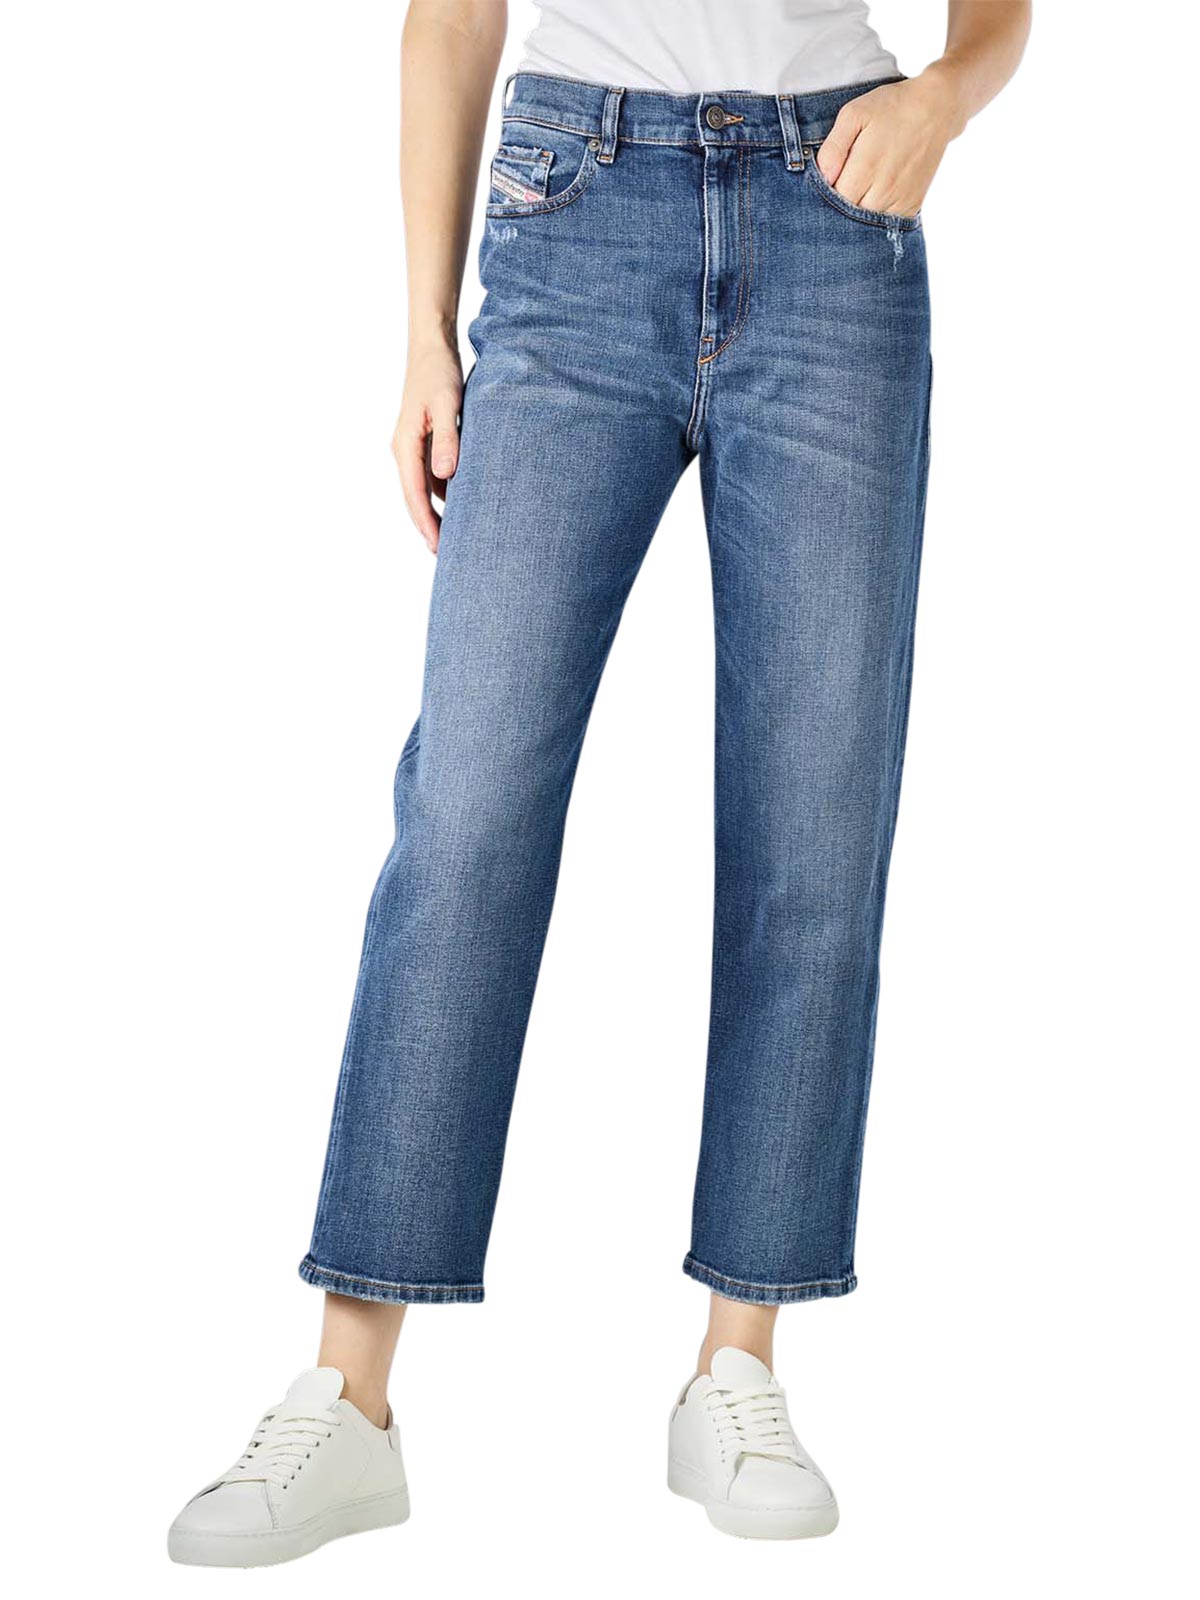 Mysterieus Niet doen kleding stof Diesel 2016 D-Air Jeans Boyfriend Fit Blue Diesel Damen Jeans | Gratis  Lieferung BEBASIC.CH - SIMPLY LOOK GOOD